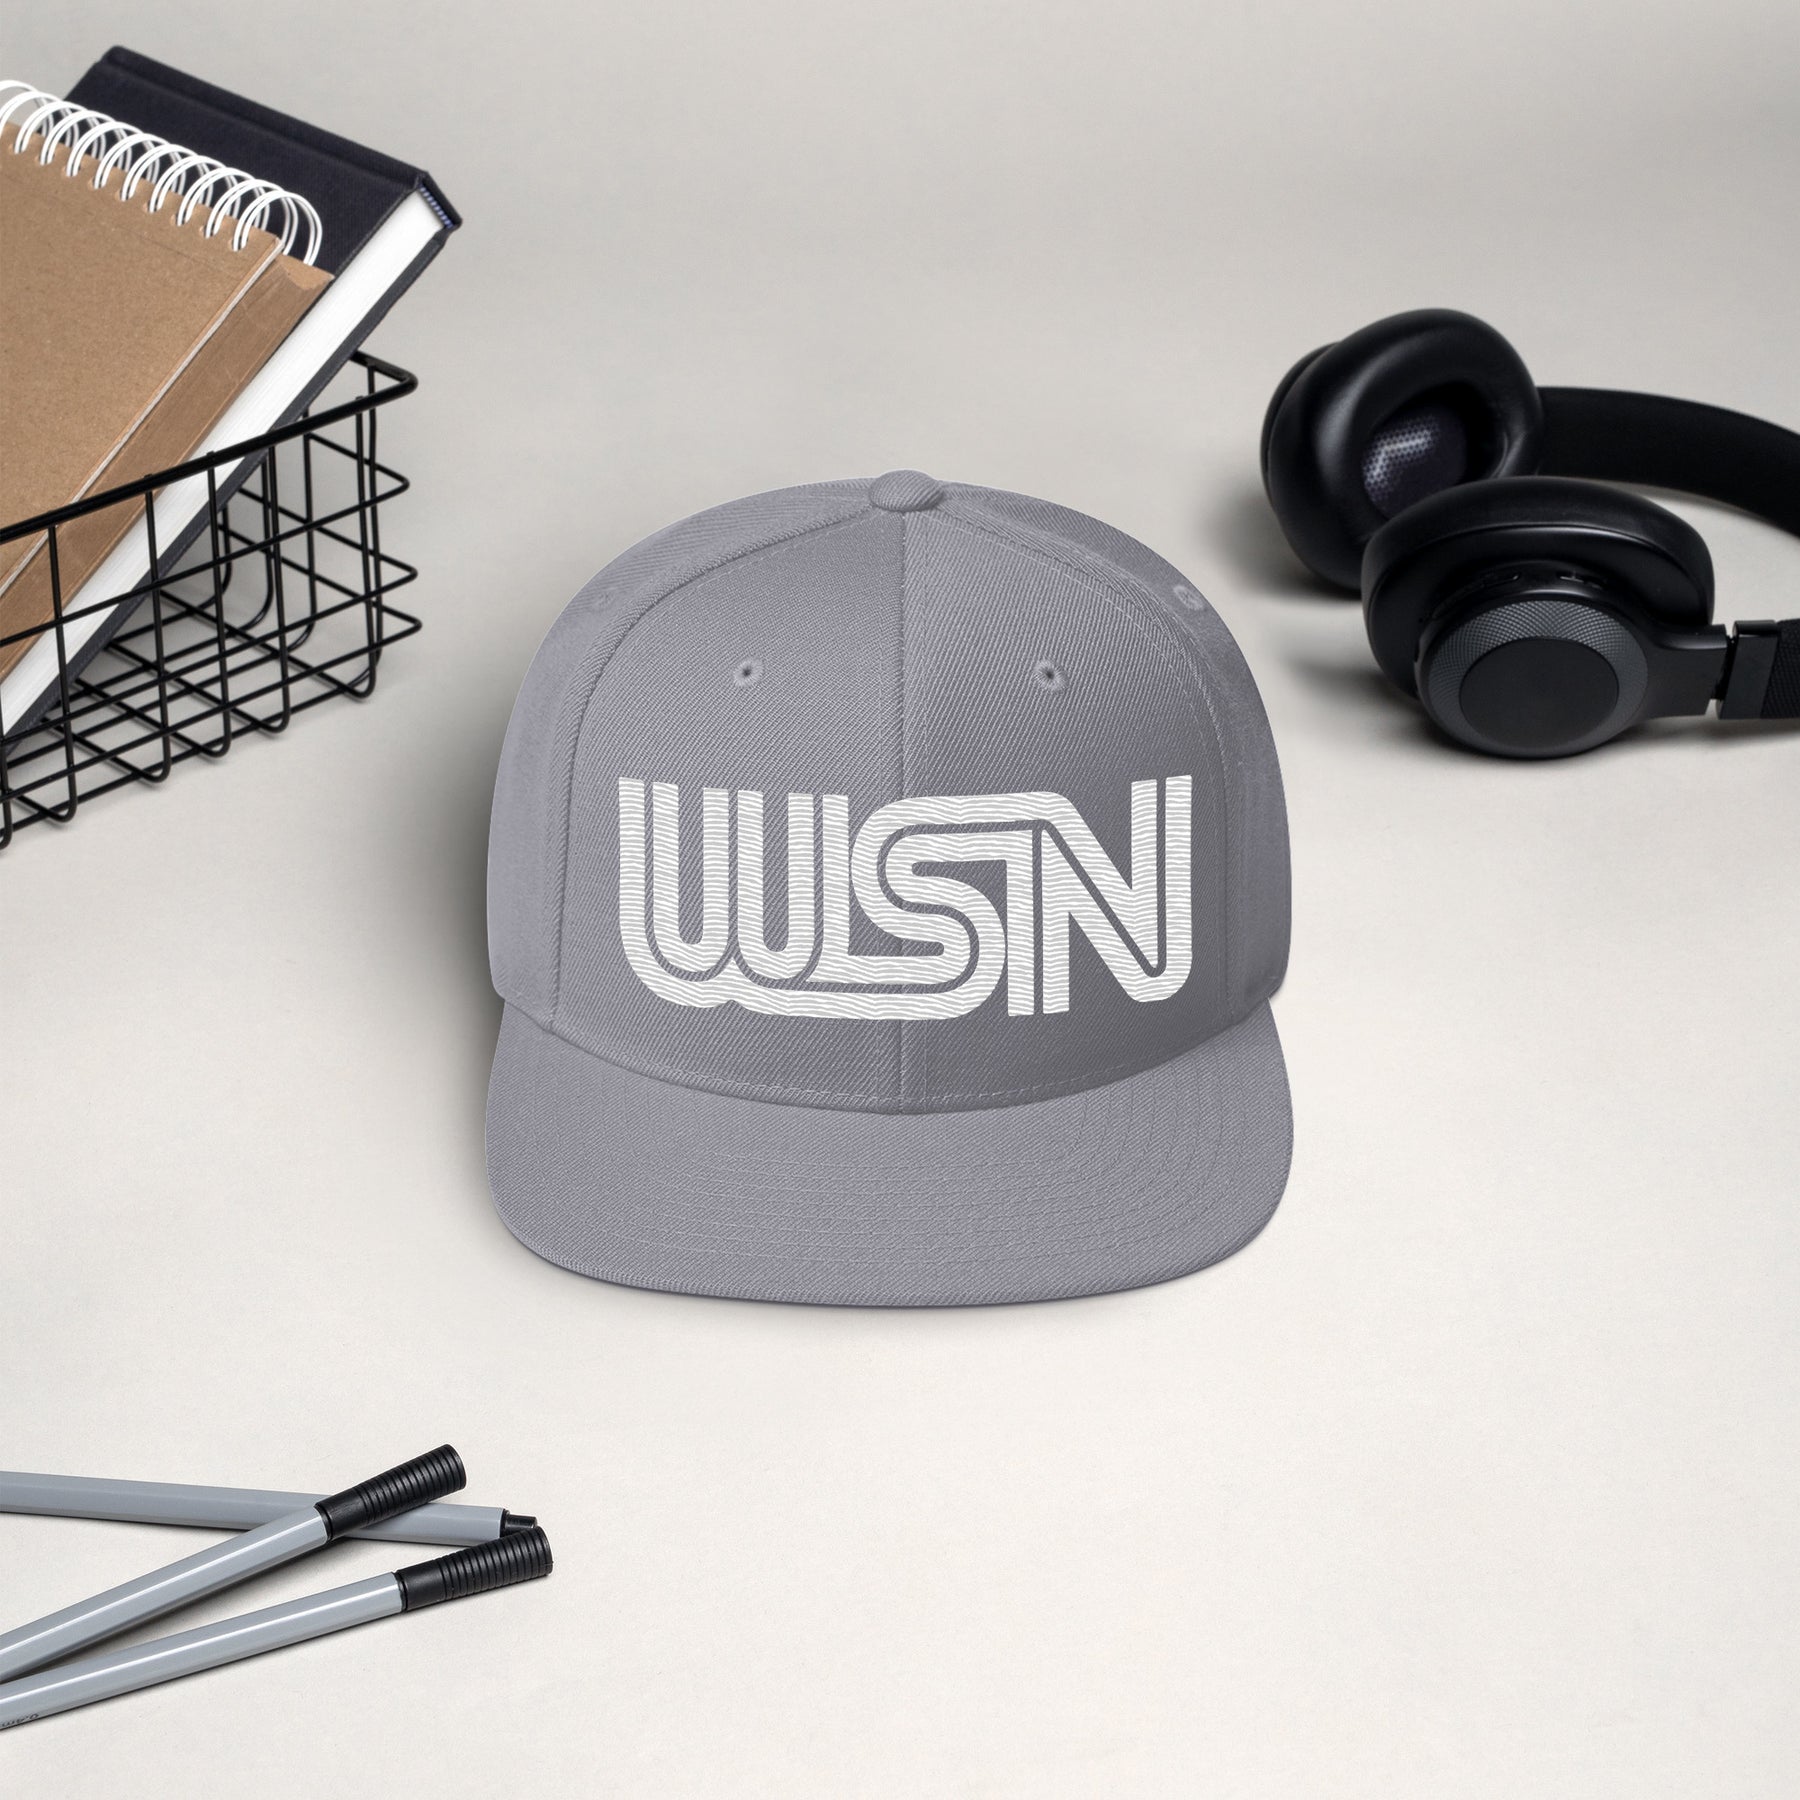 WSN "CNN" Parody Snapback Hat